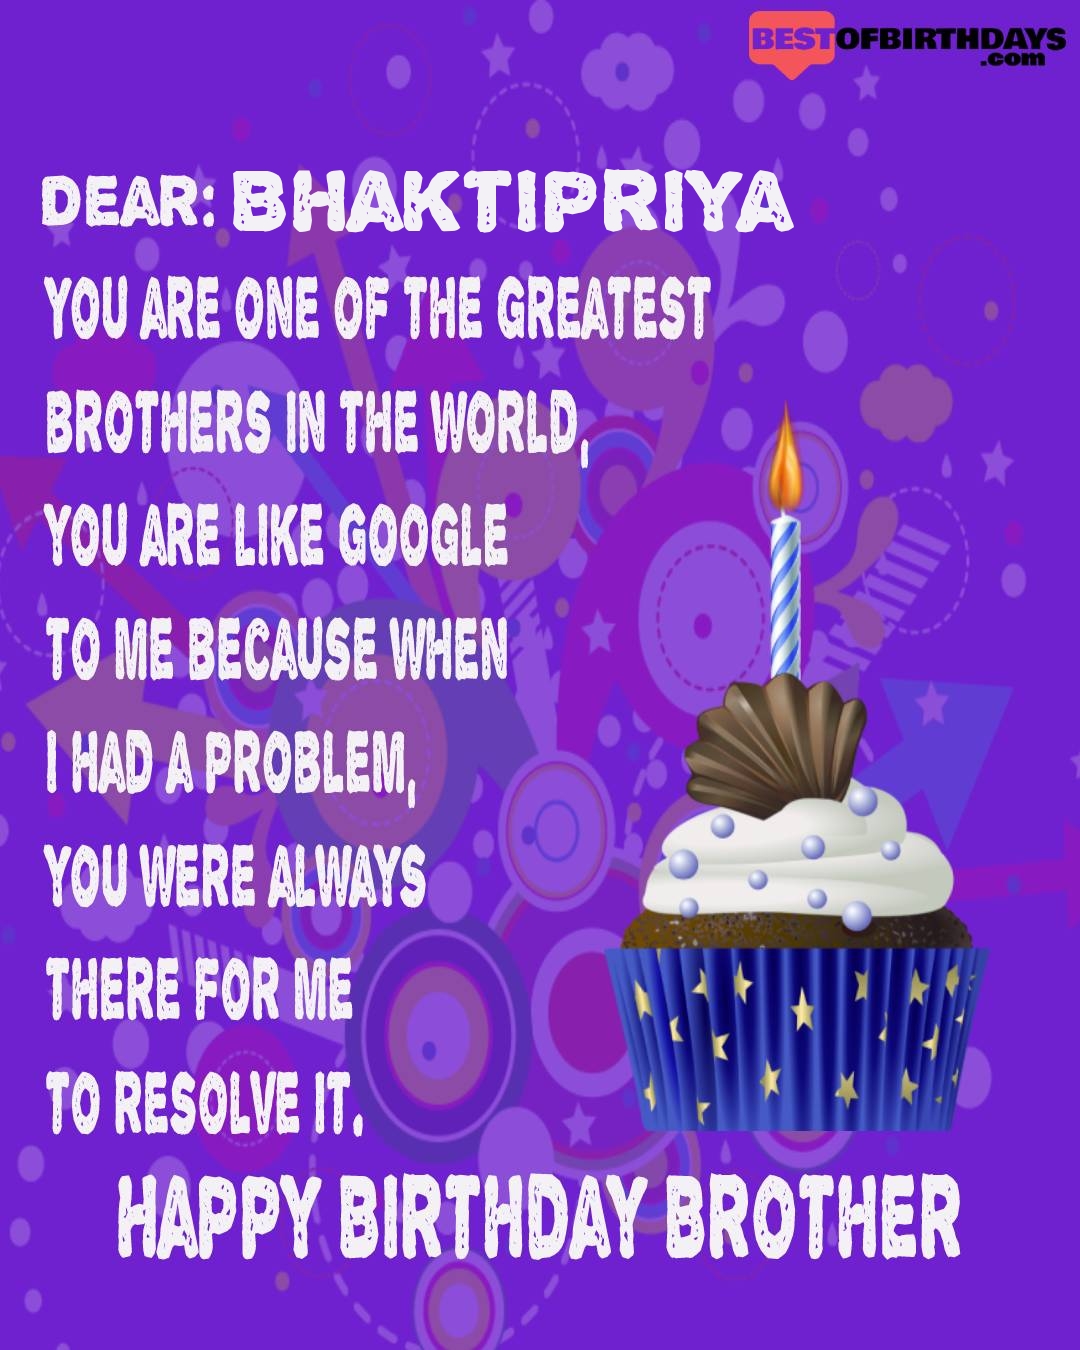 Happy birthday bhaktipriya bhai brother bro